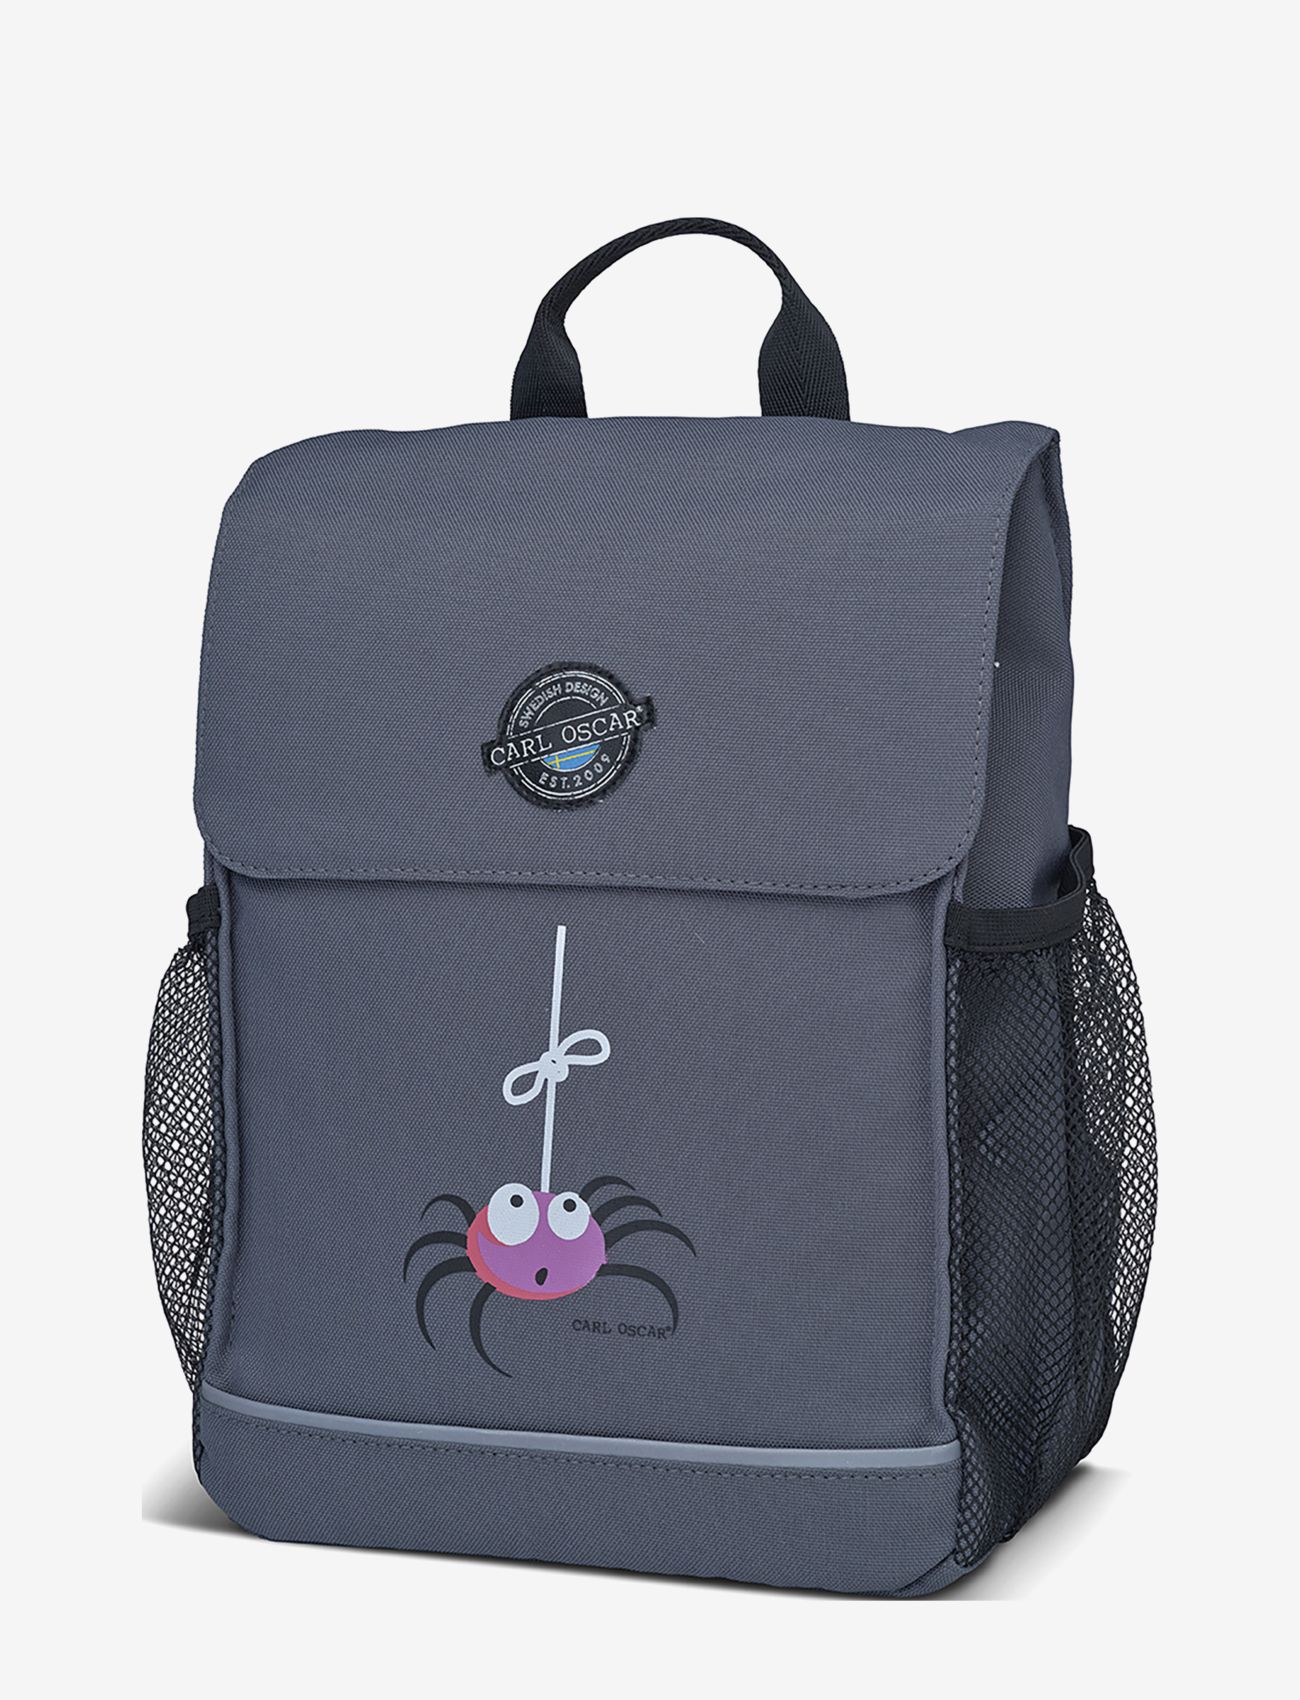 Carl Oscar - Pack n' Snack™ Backpack 8 L - Grey - backpacks - grey - 1